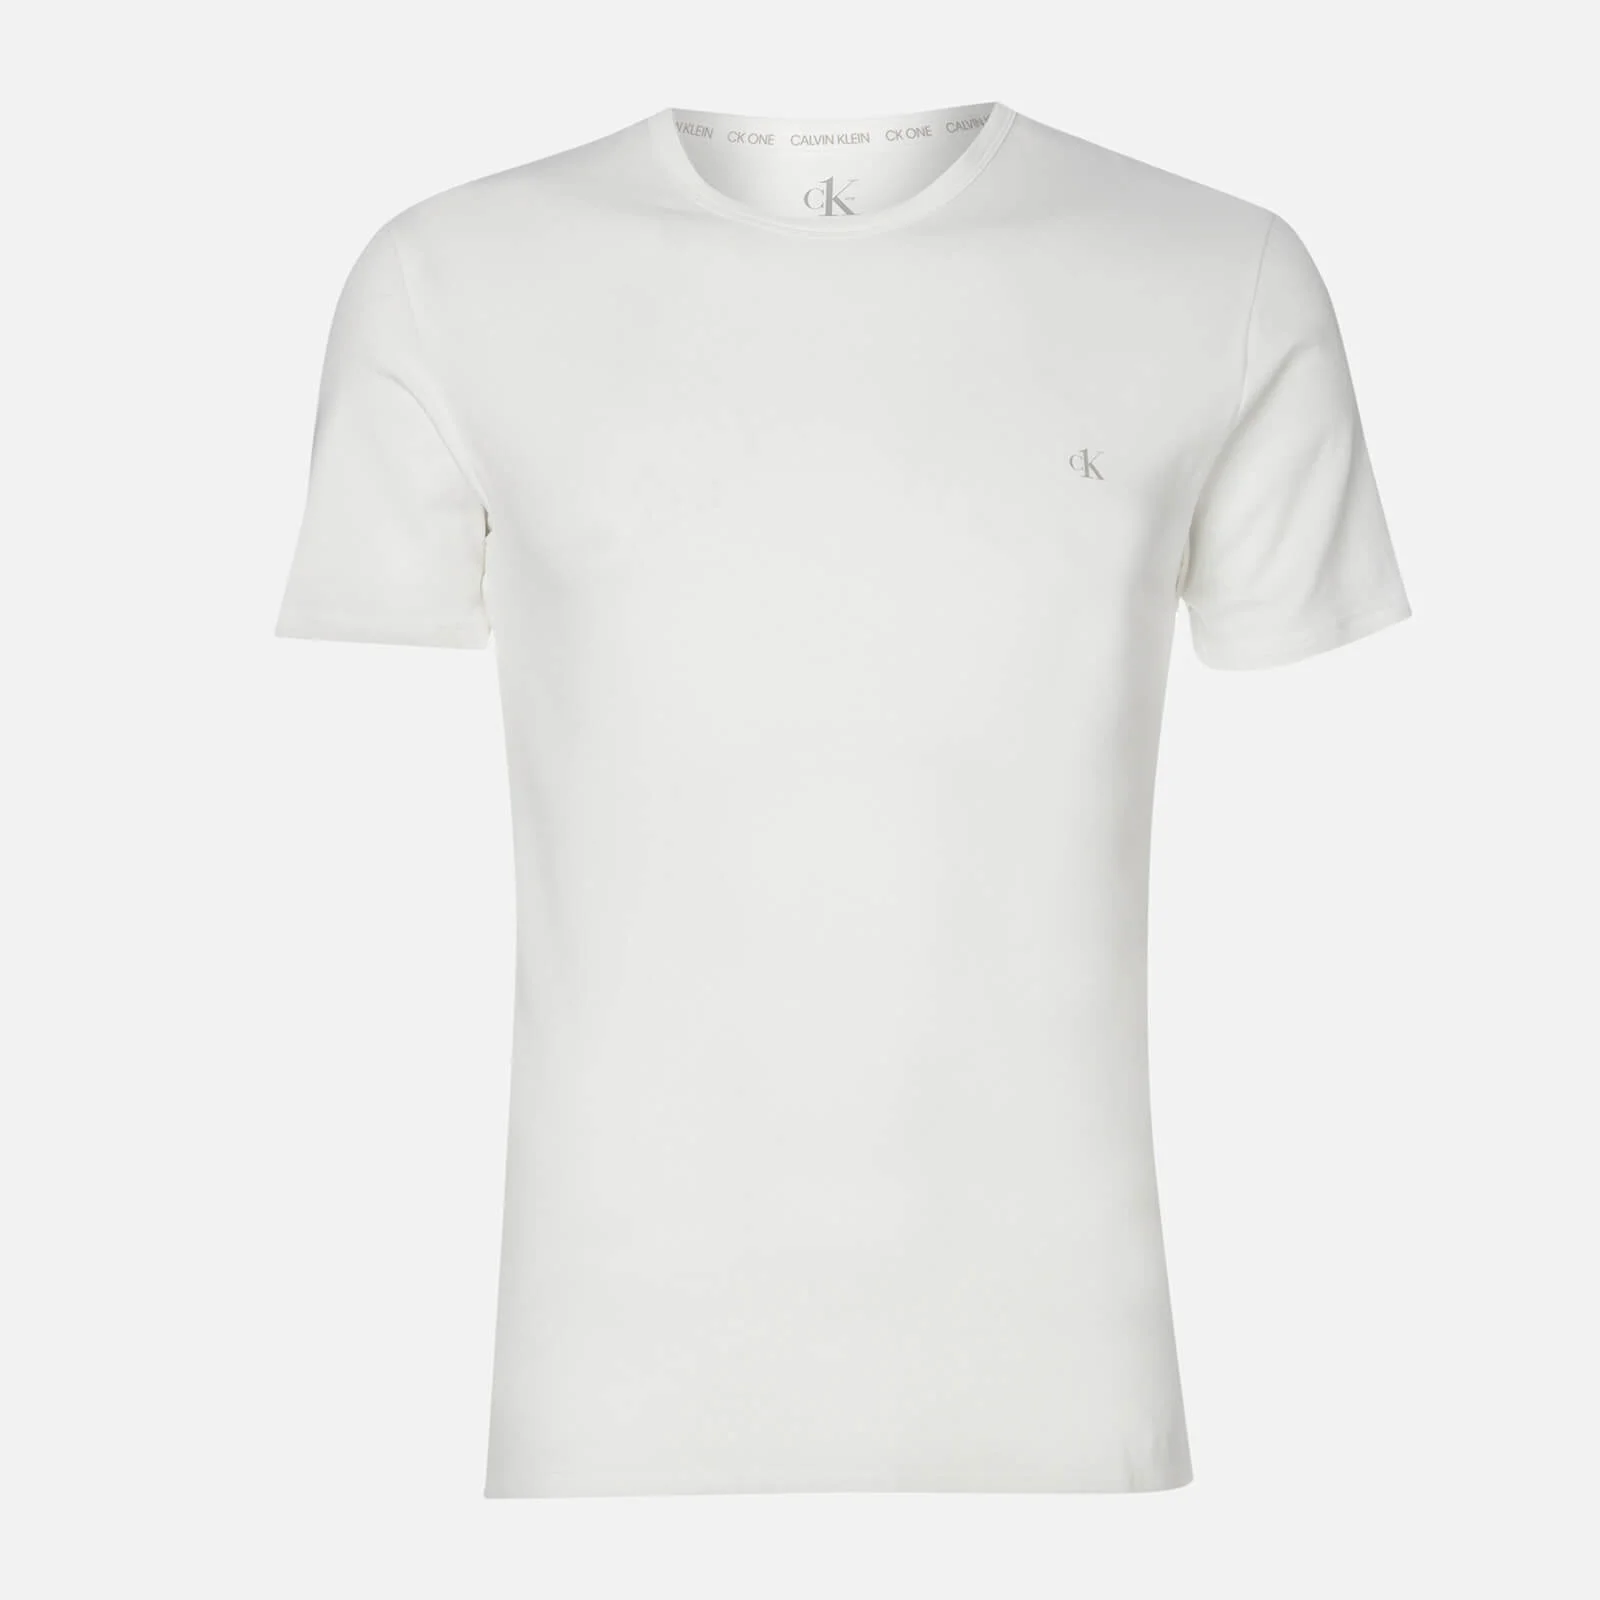 Calvin Klein Men's 2 Pack Crewneck T-Shirts - White/Black Image 1